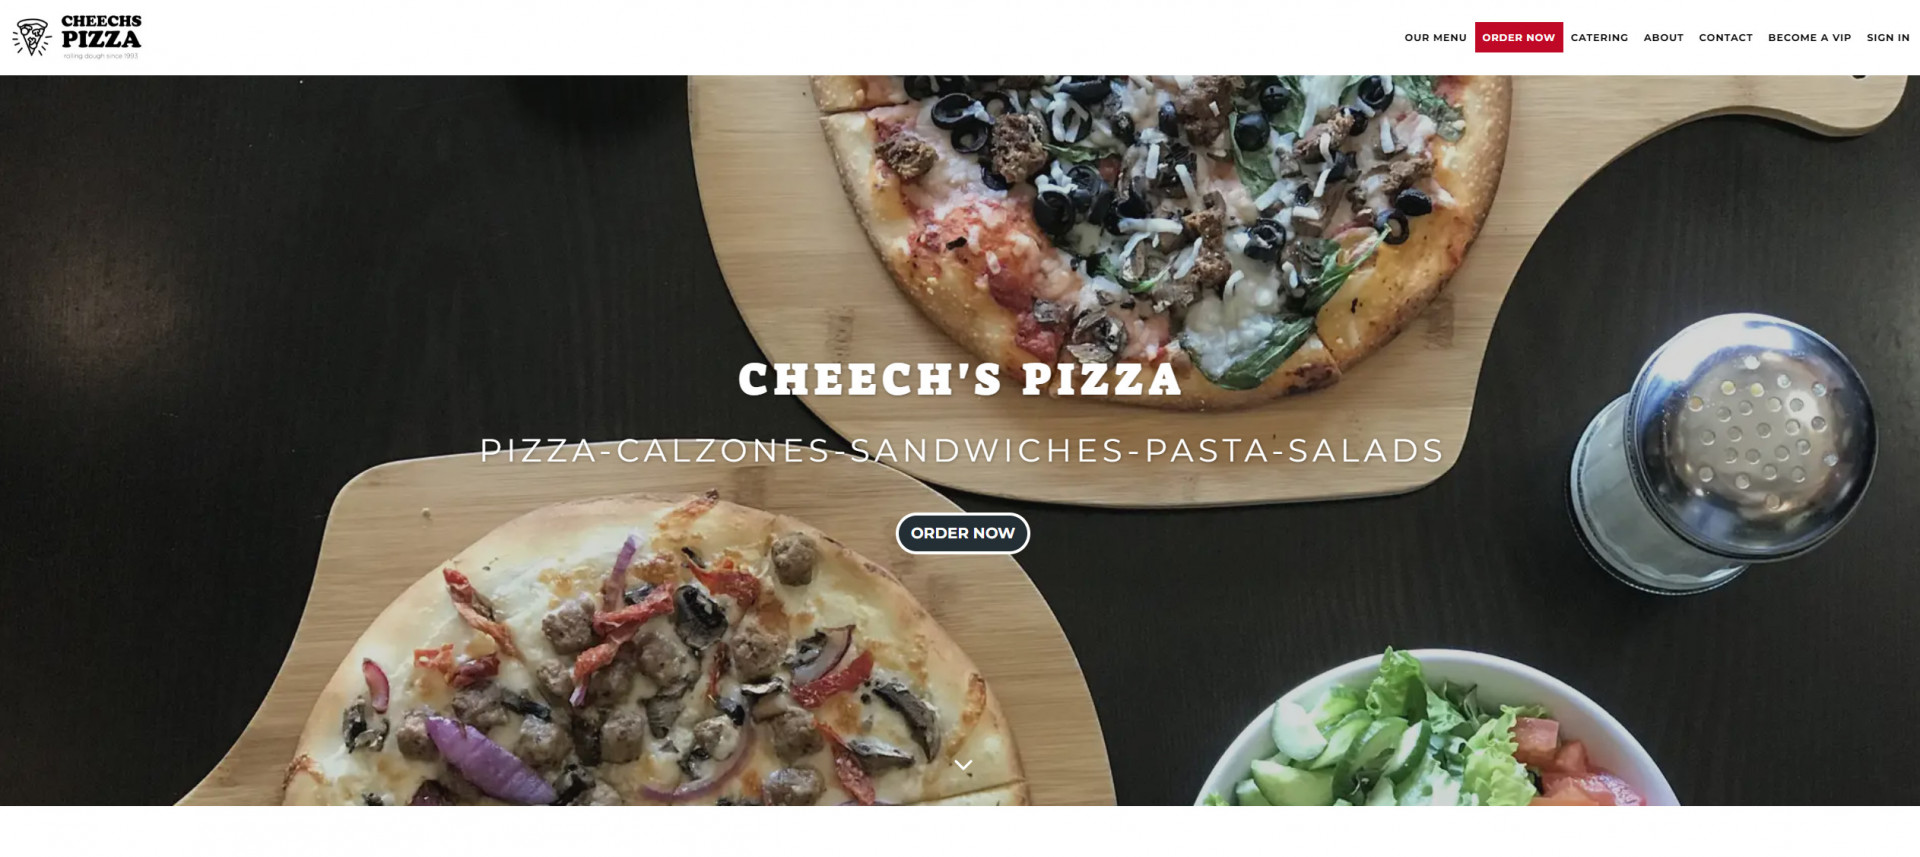 A top restaurant website example for pizzerias